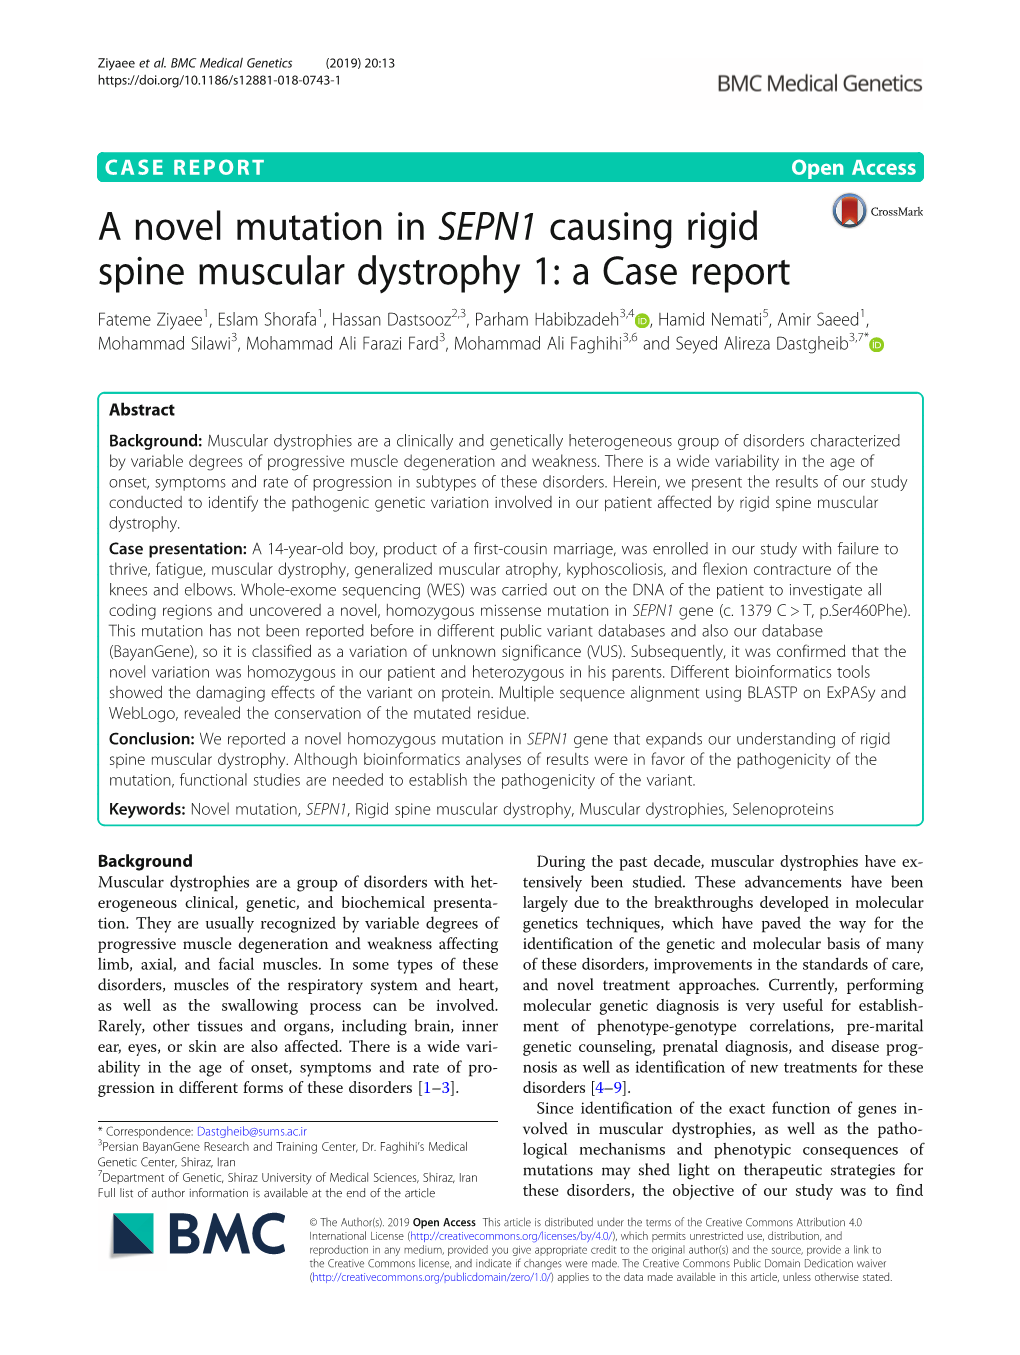 A Novel Mutation in SEPN1 Causing Rigid Spine